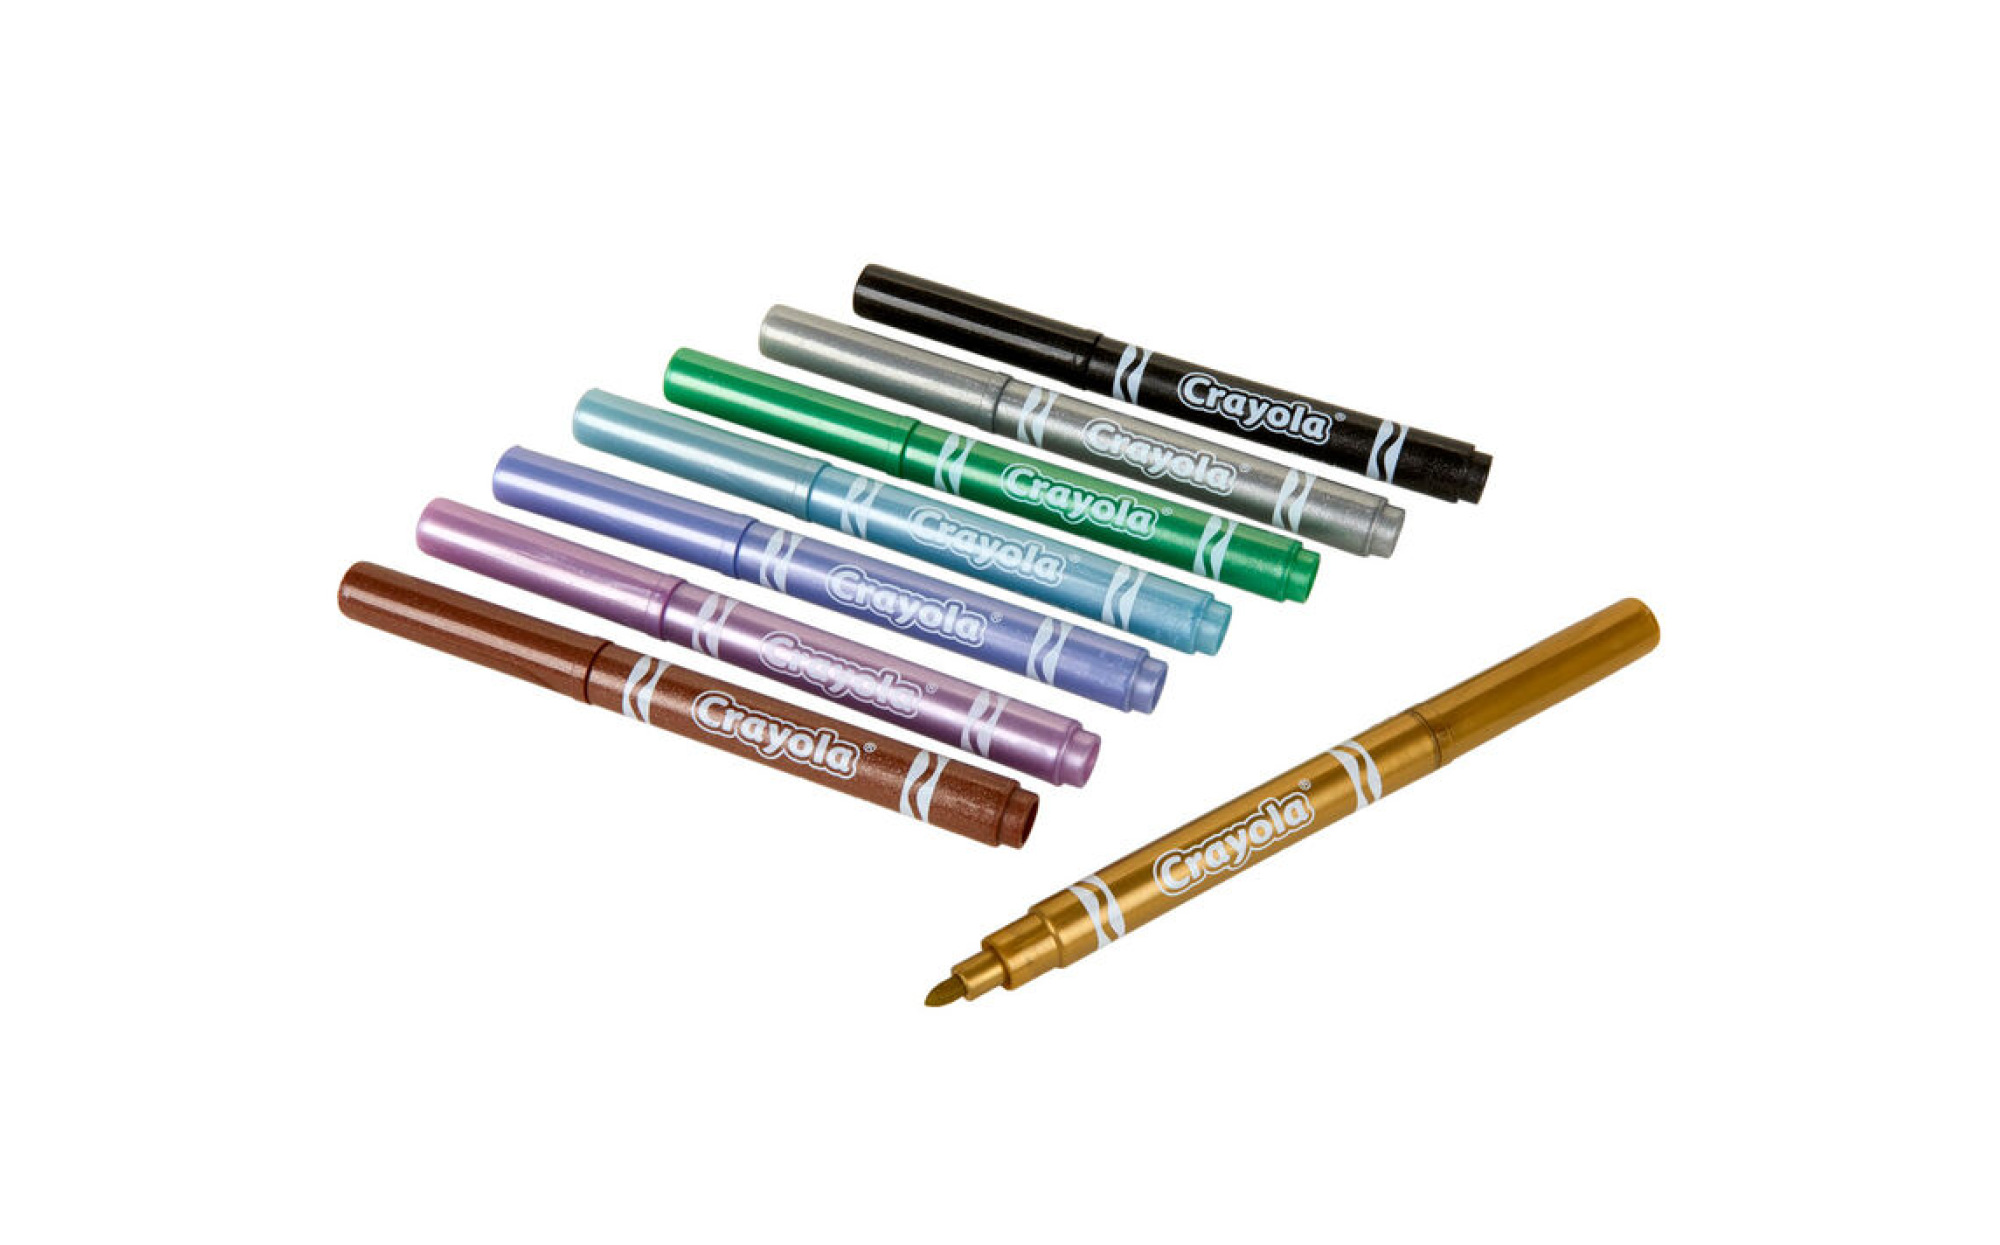 Crayola Metallic Markers 